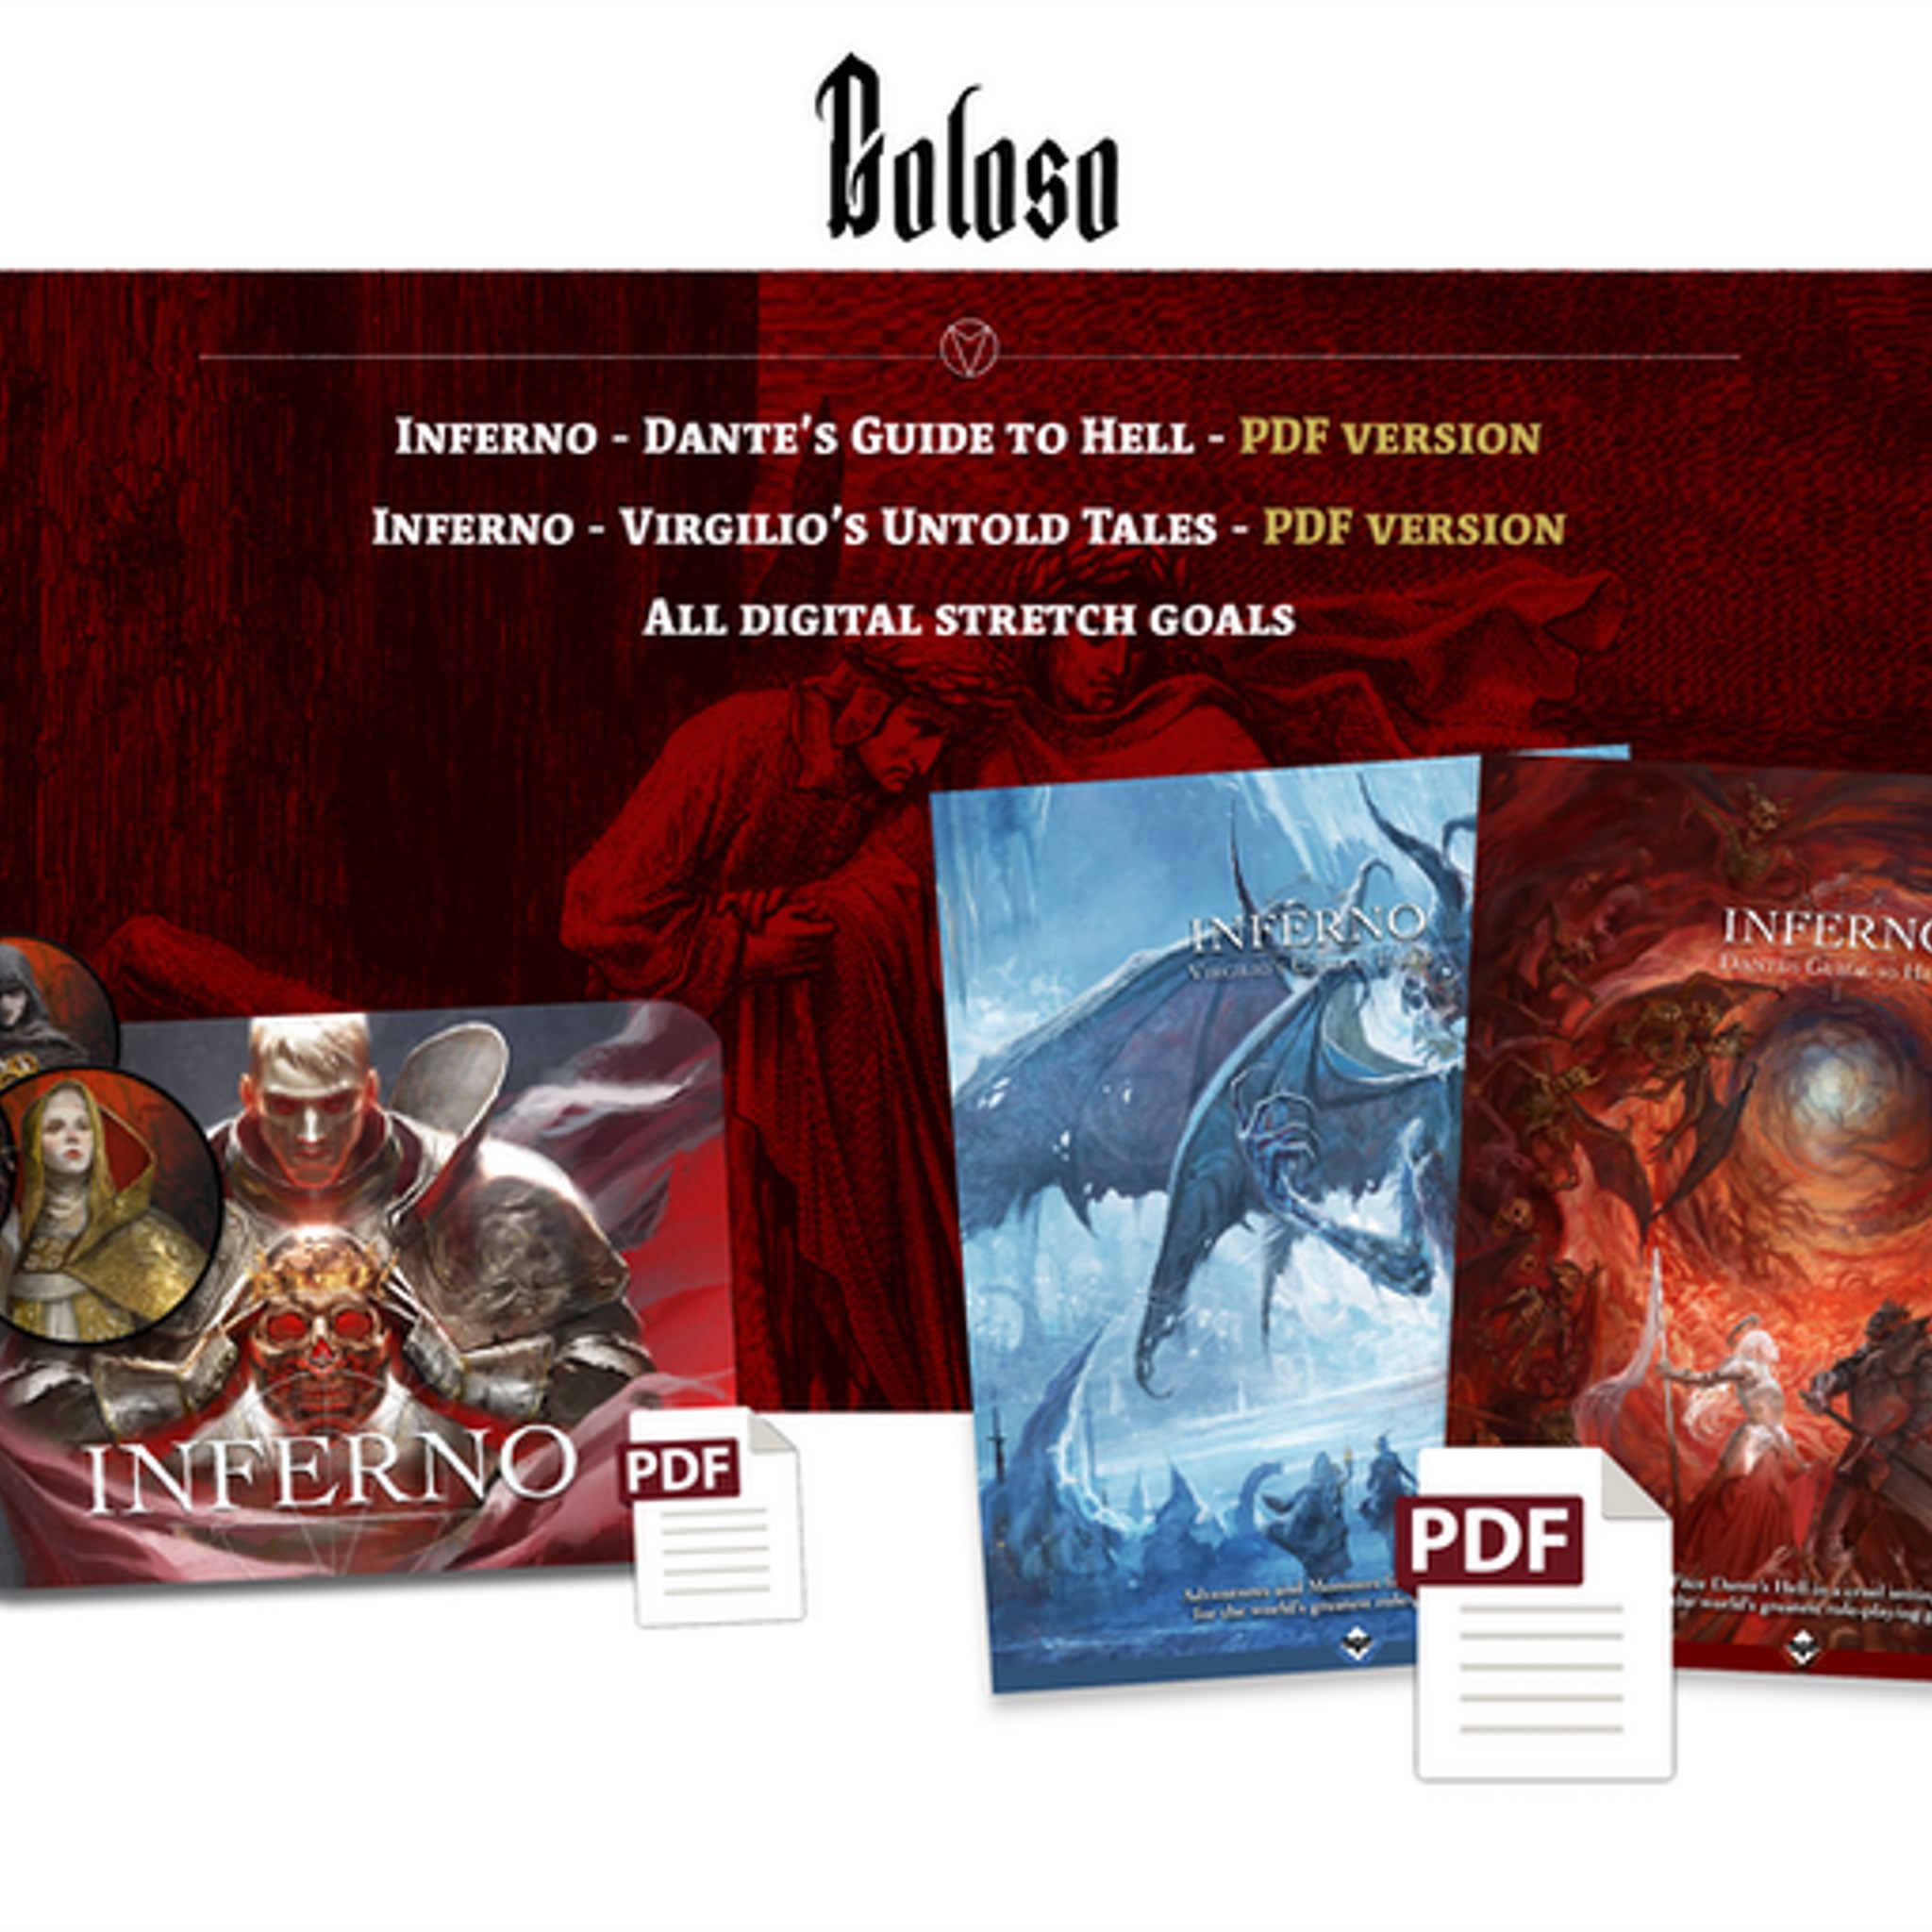 Inferno - Dante's Guide to Hell for 5e by Acheron Books — Kickstarter